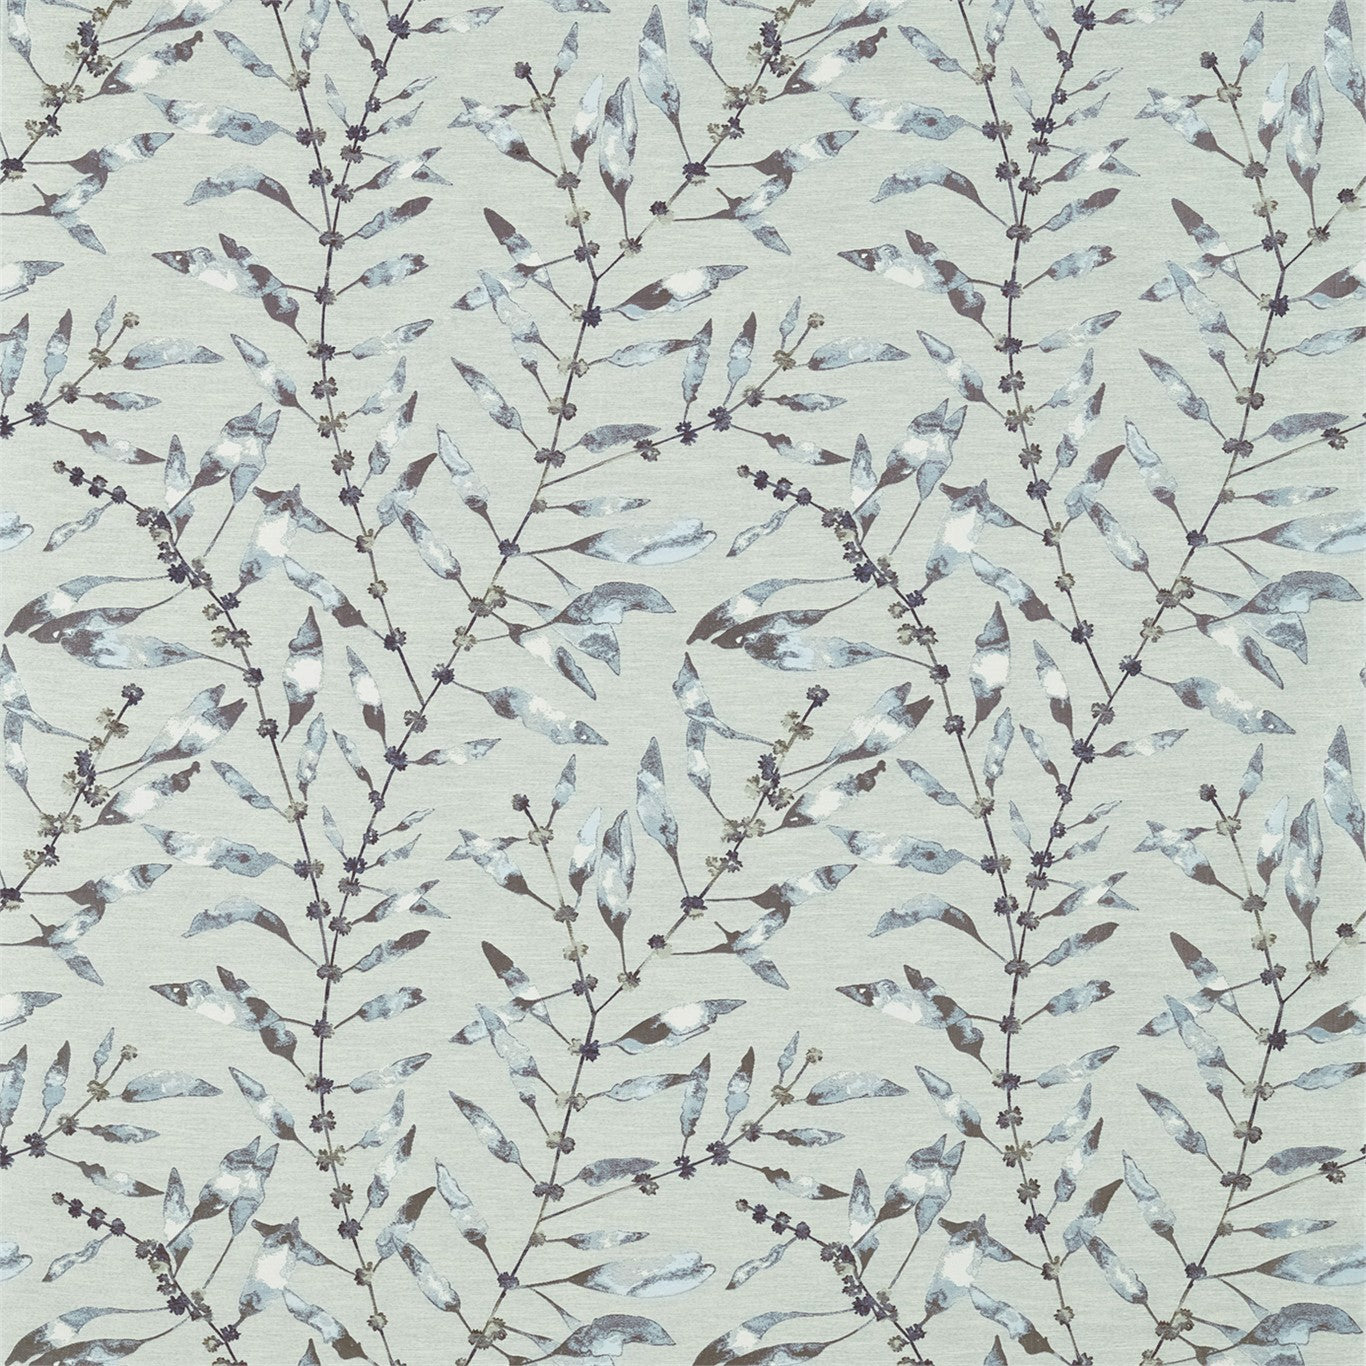 Chaconia Fabric by Harlequin - HANZ132291 - Indigo/Seaspray